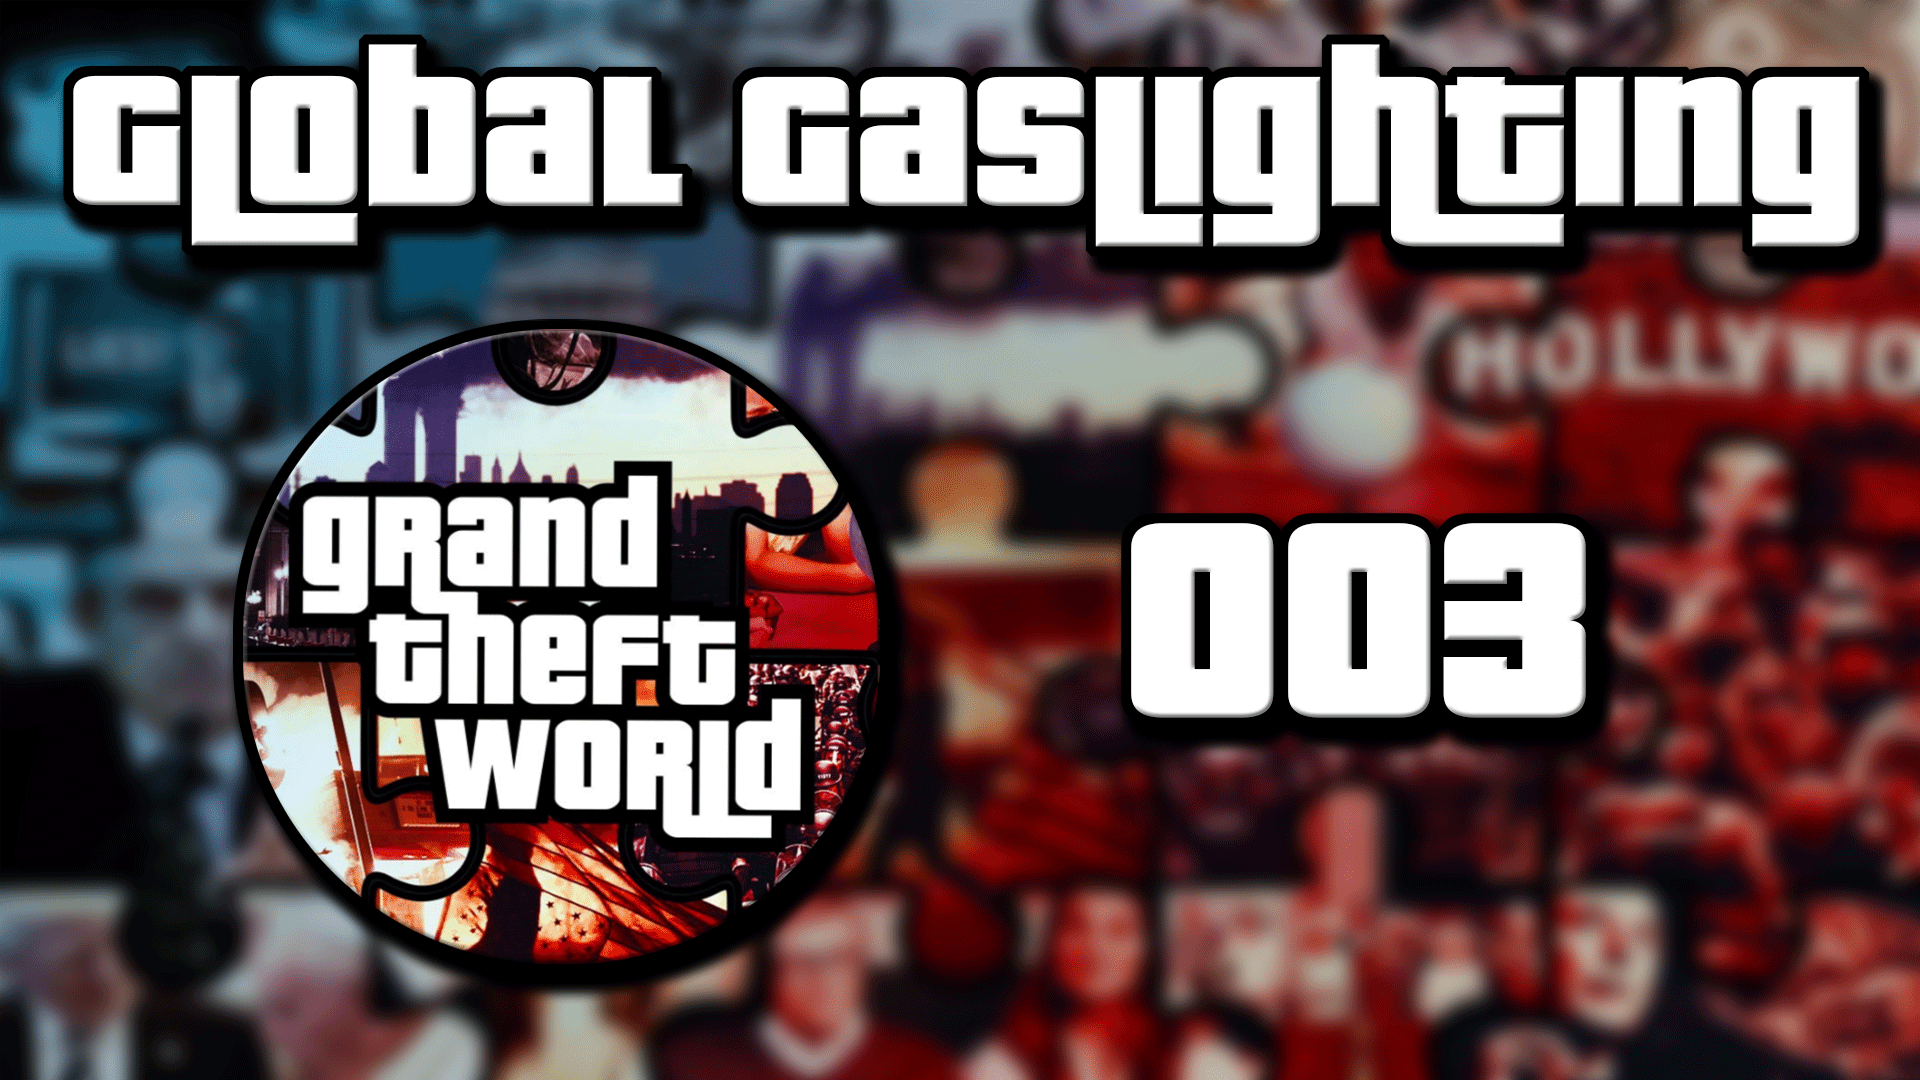 Grand Theft World Podcast 003 | Global Gaslighting